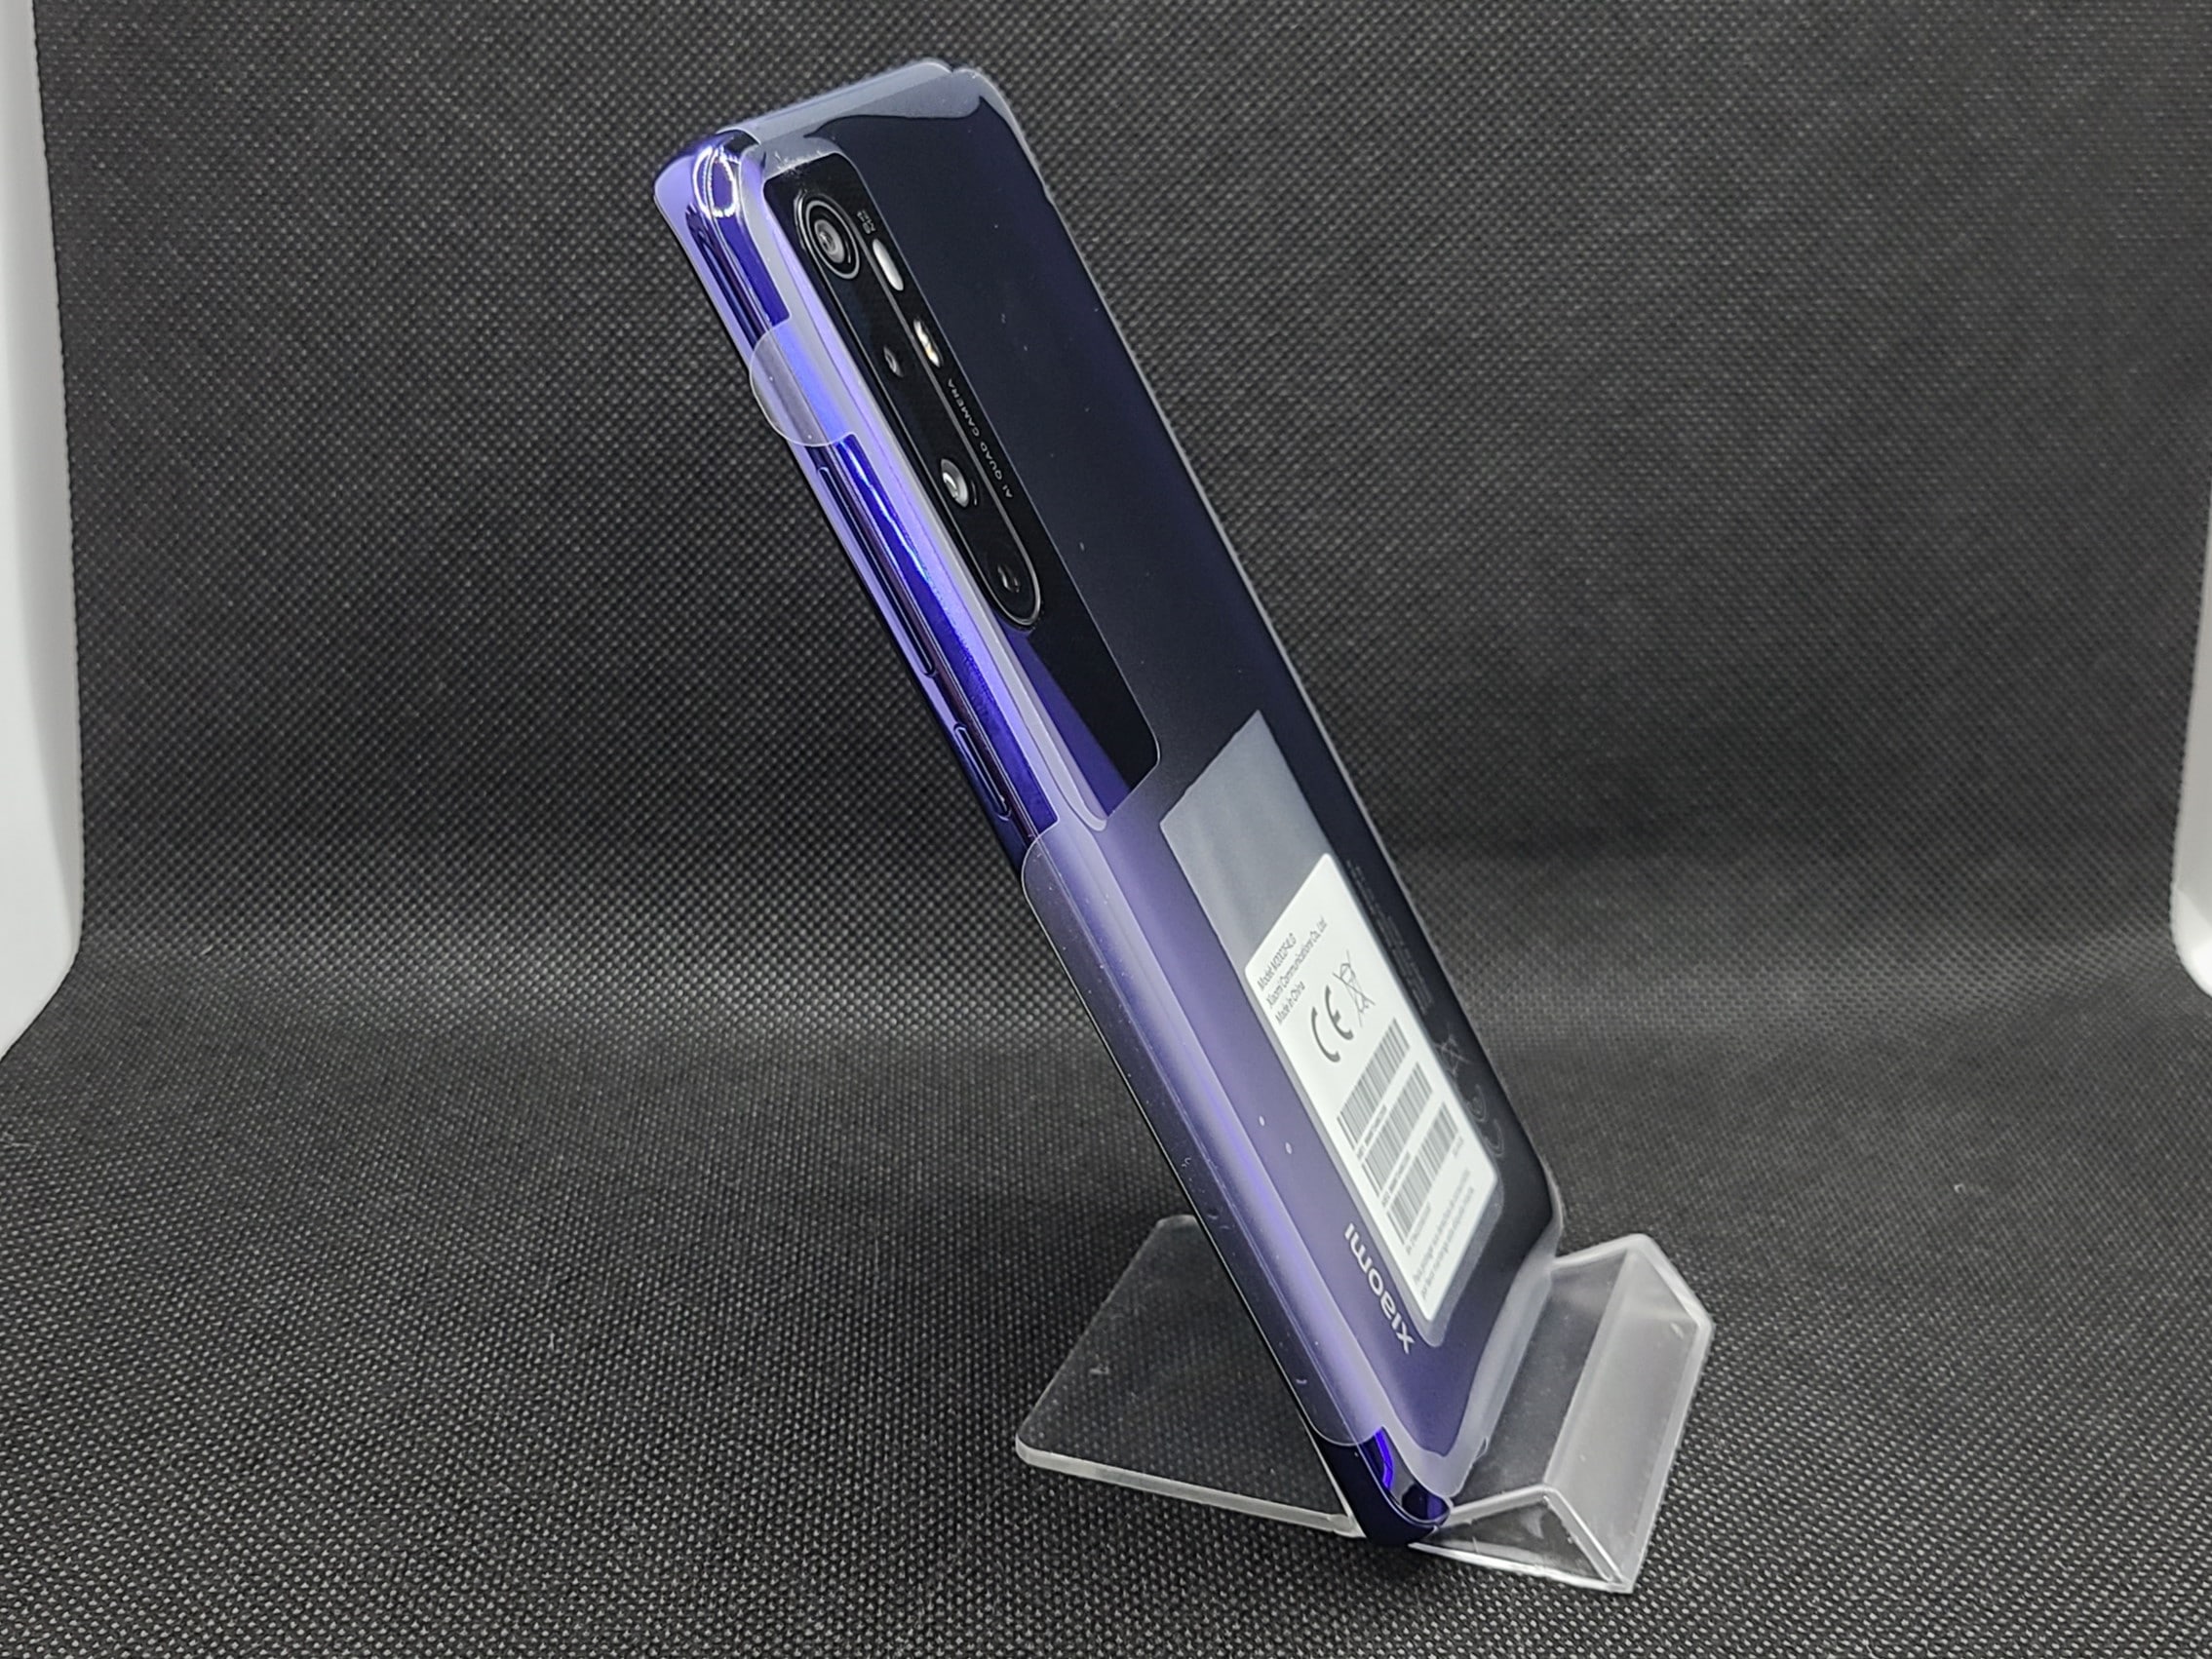 Mi Note 10 Lite｜価格比較・SIMフリー・最新情報 - 価格.com